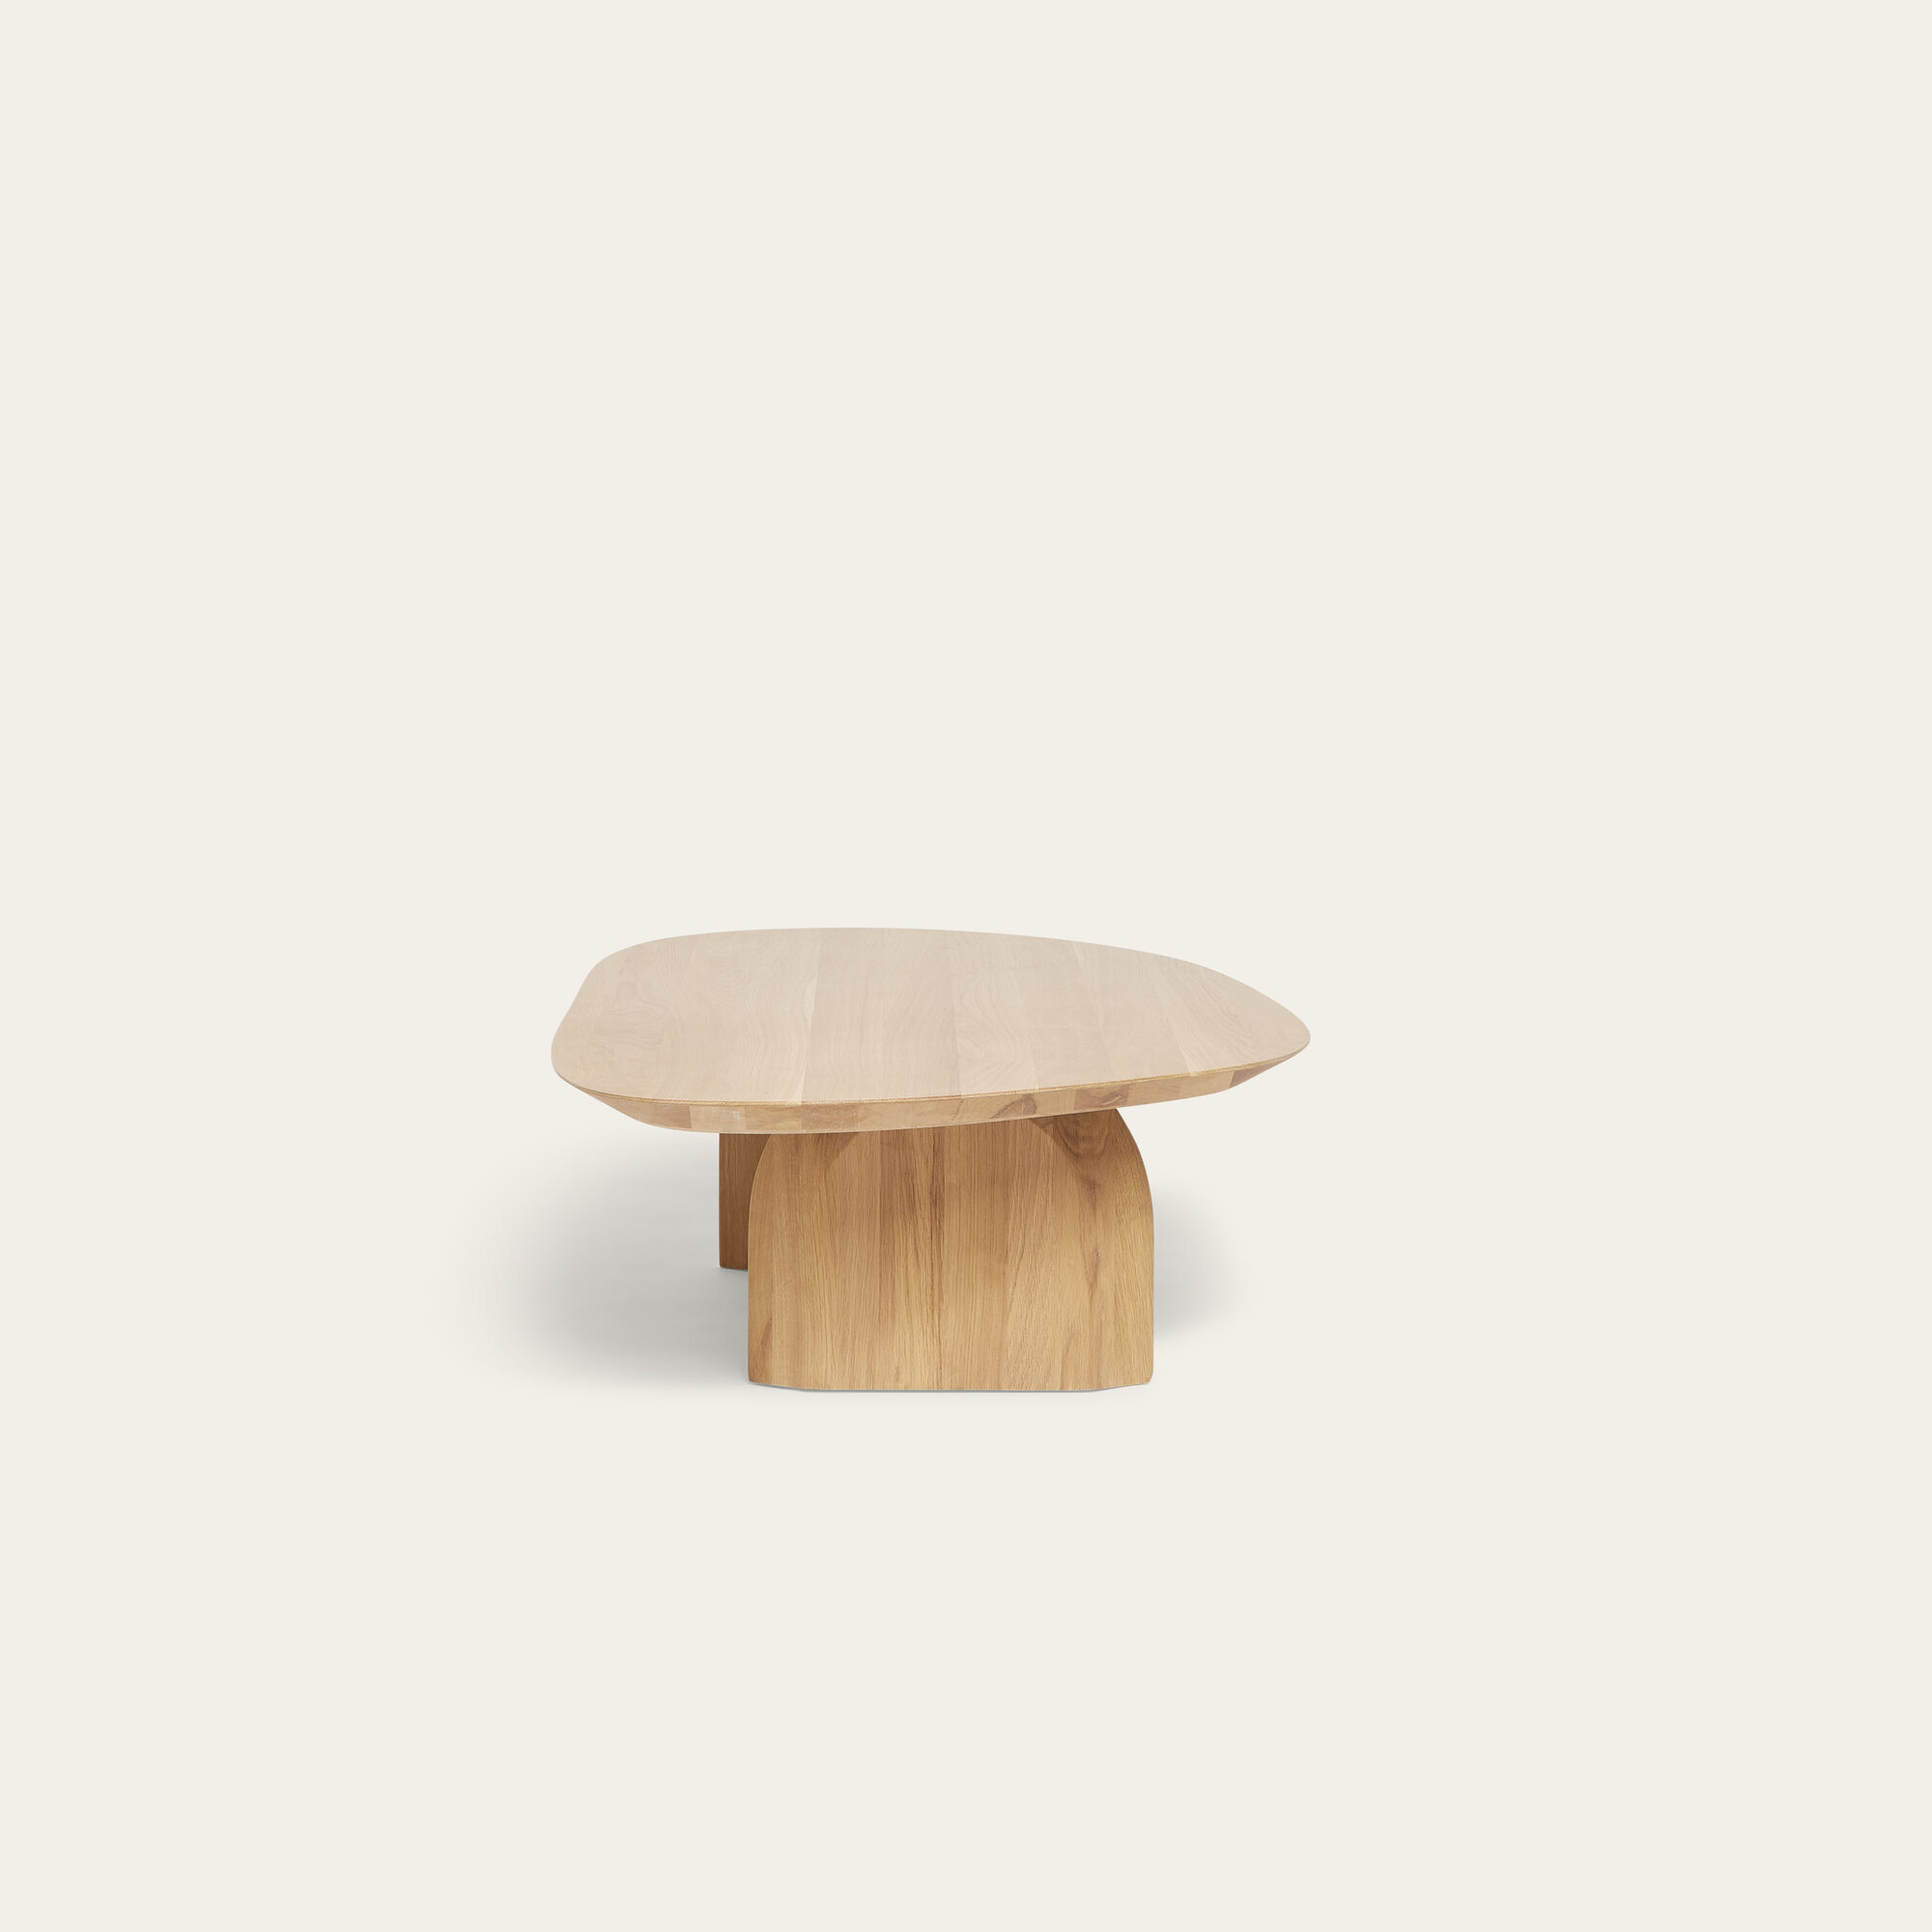 Design Coffee Table | Slot Coffee Table Oak hardwax oil natural light 3041 | Oak hardwax oil natural light 3041 | Studio HENK| 